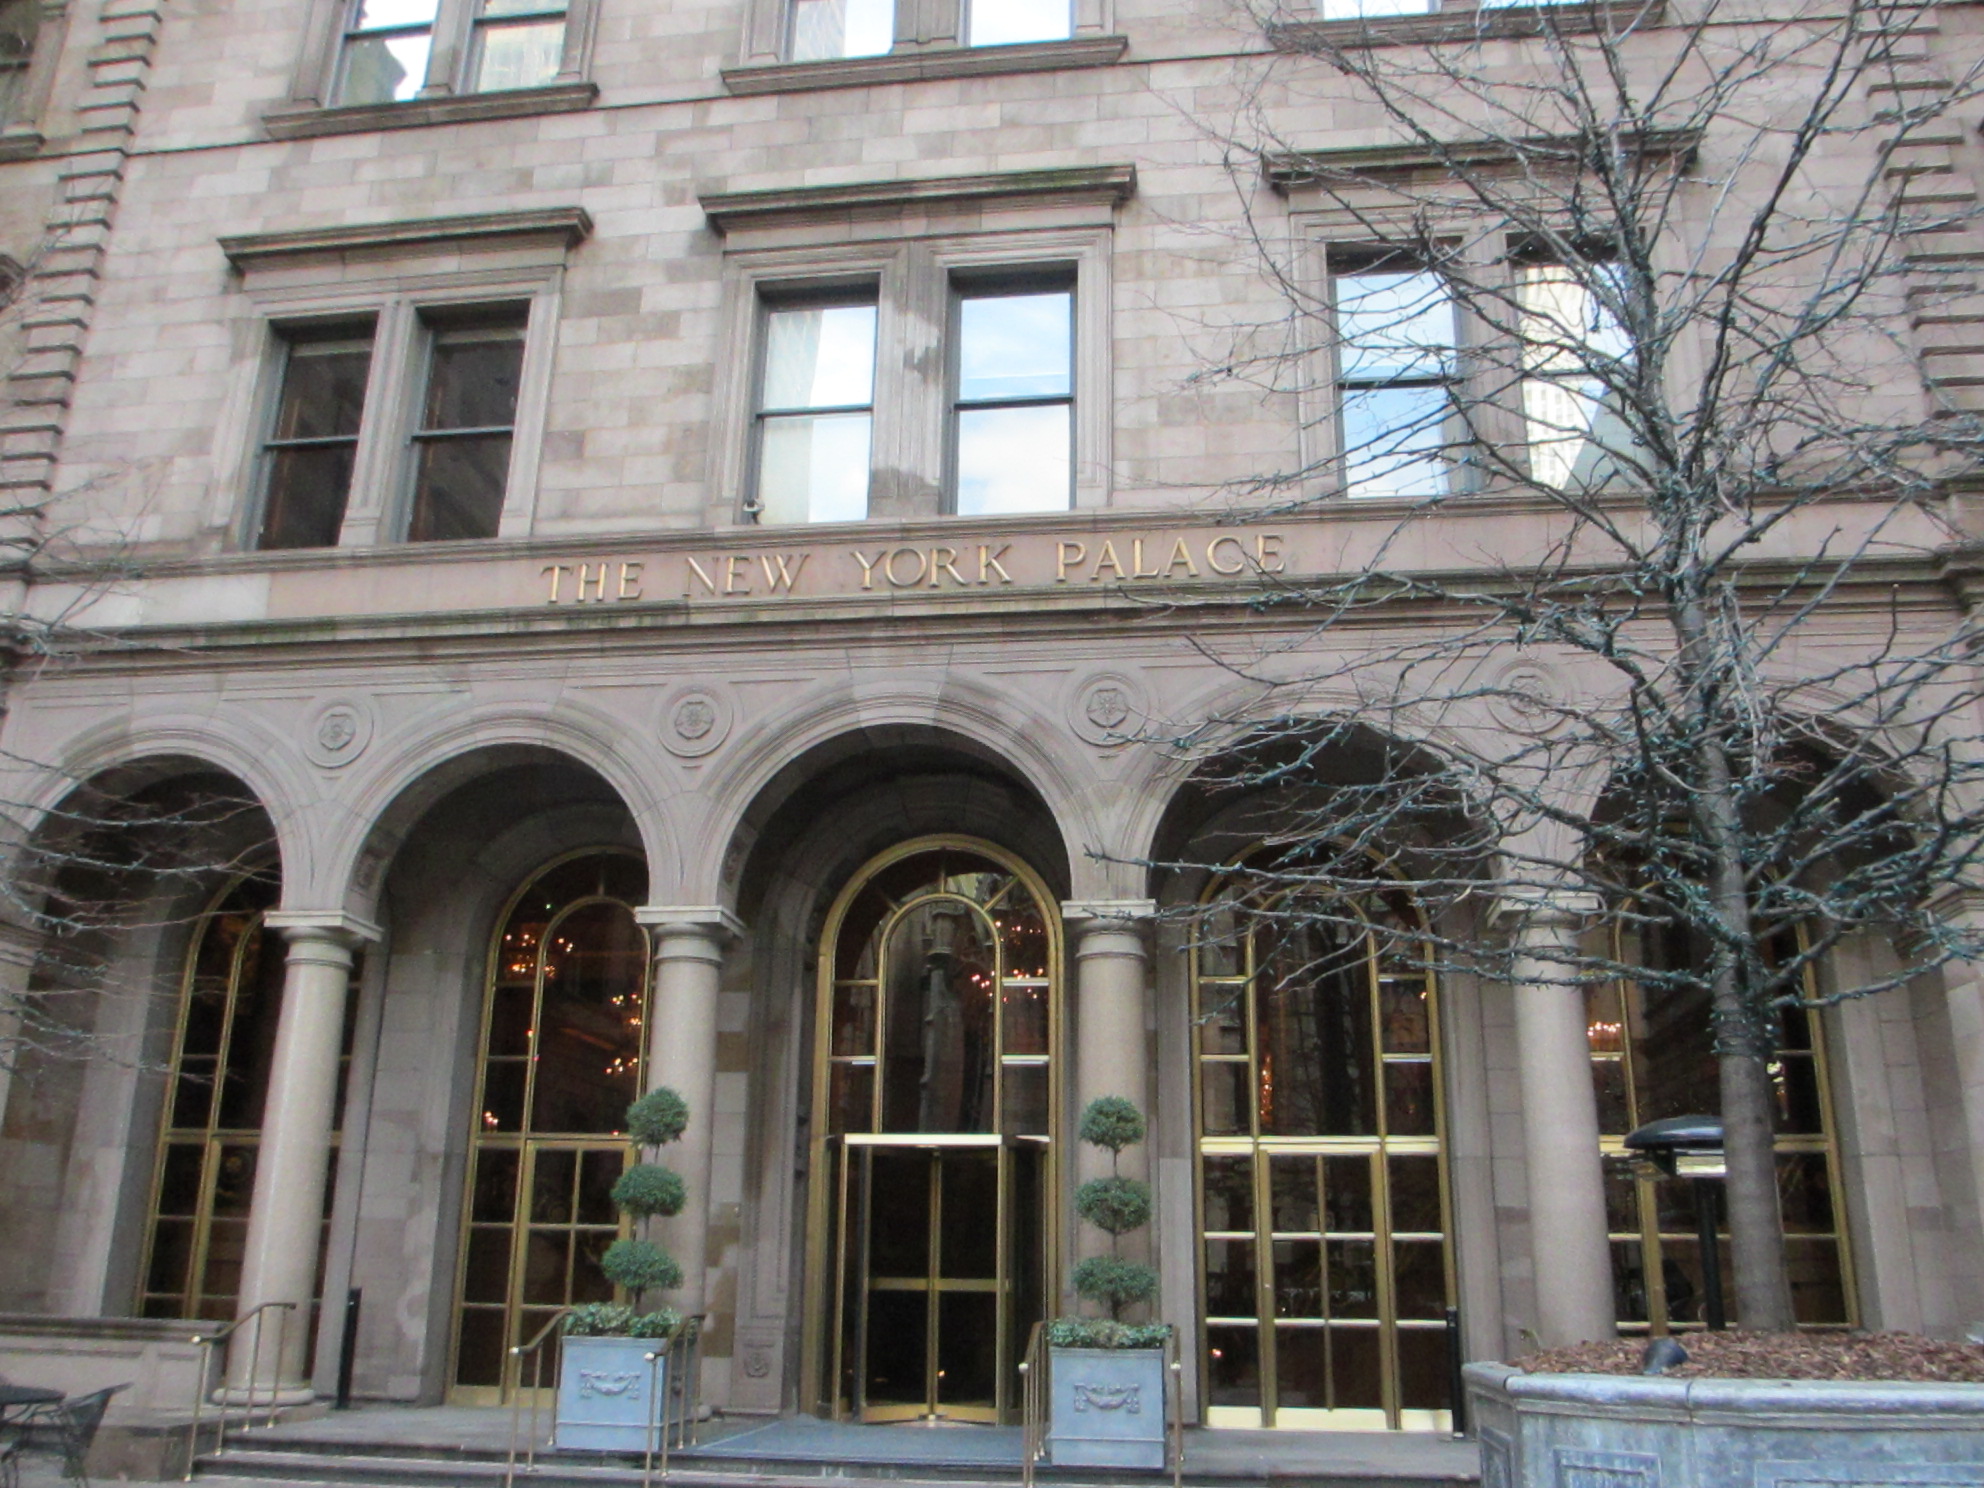 The New York Palace Hotel - Gossip Girl location